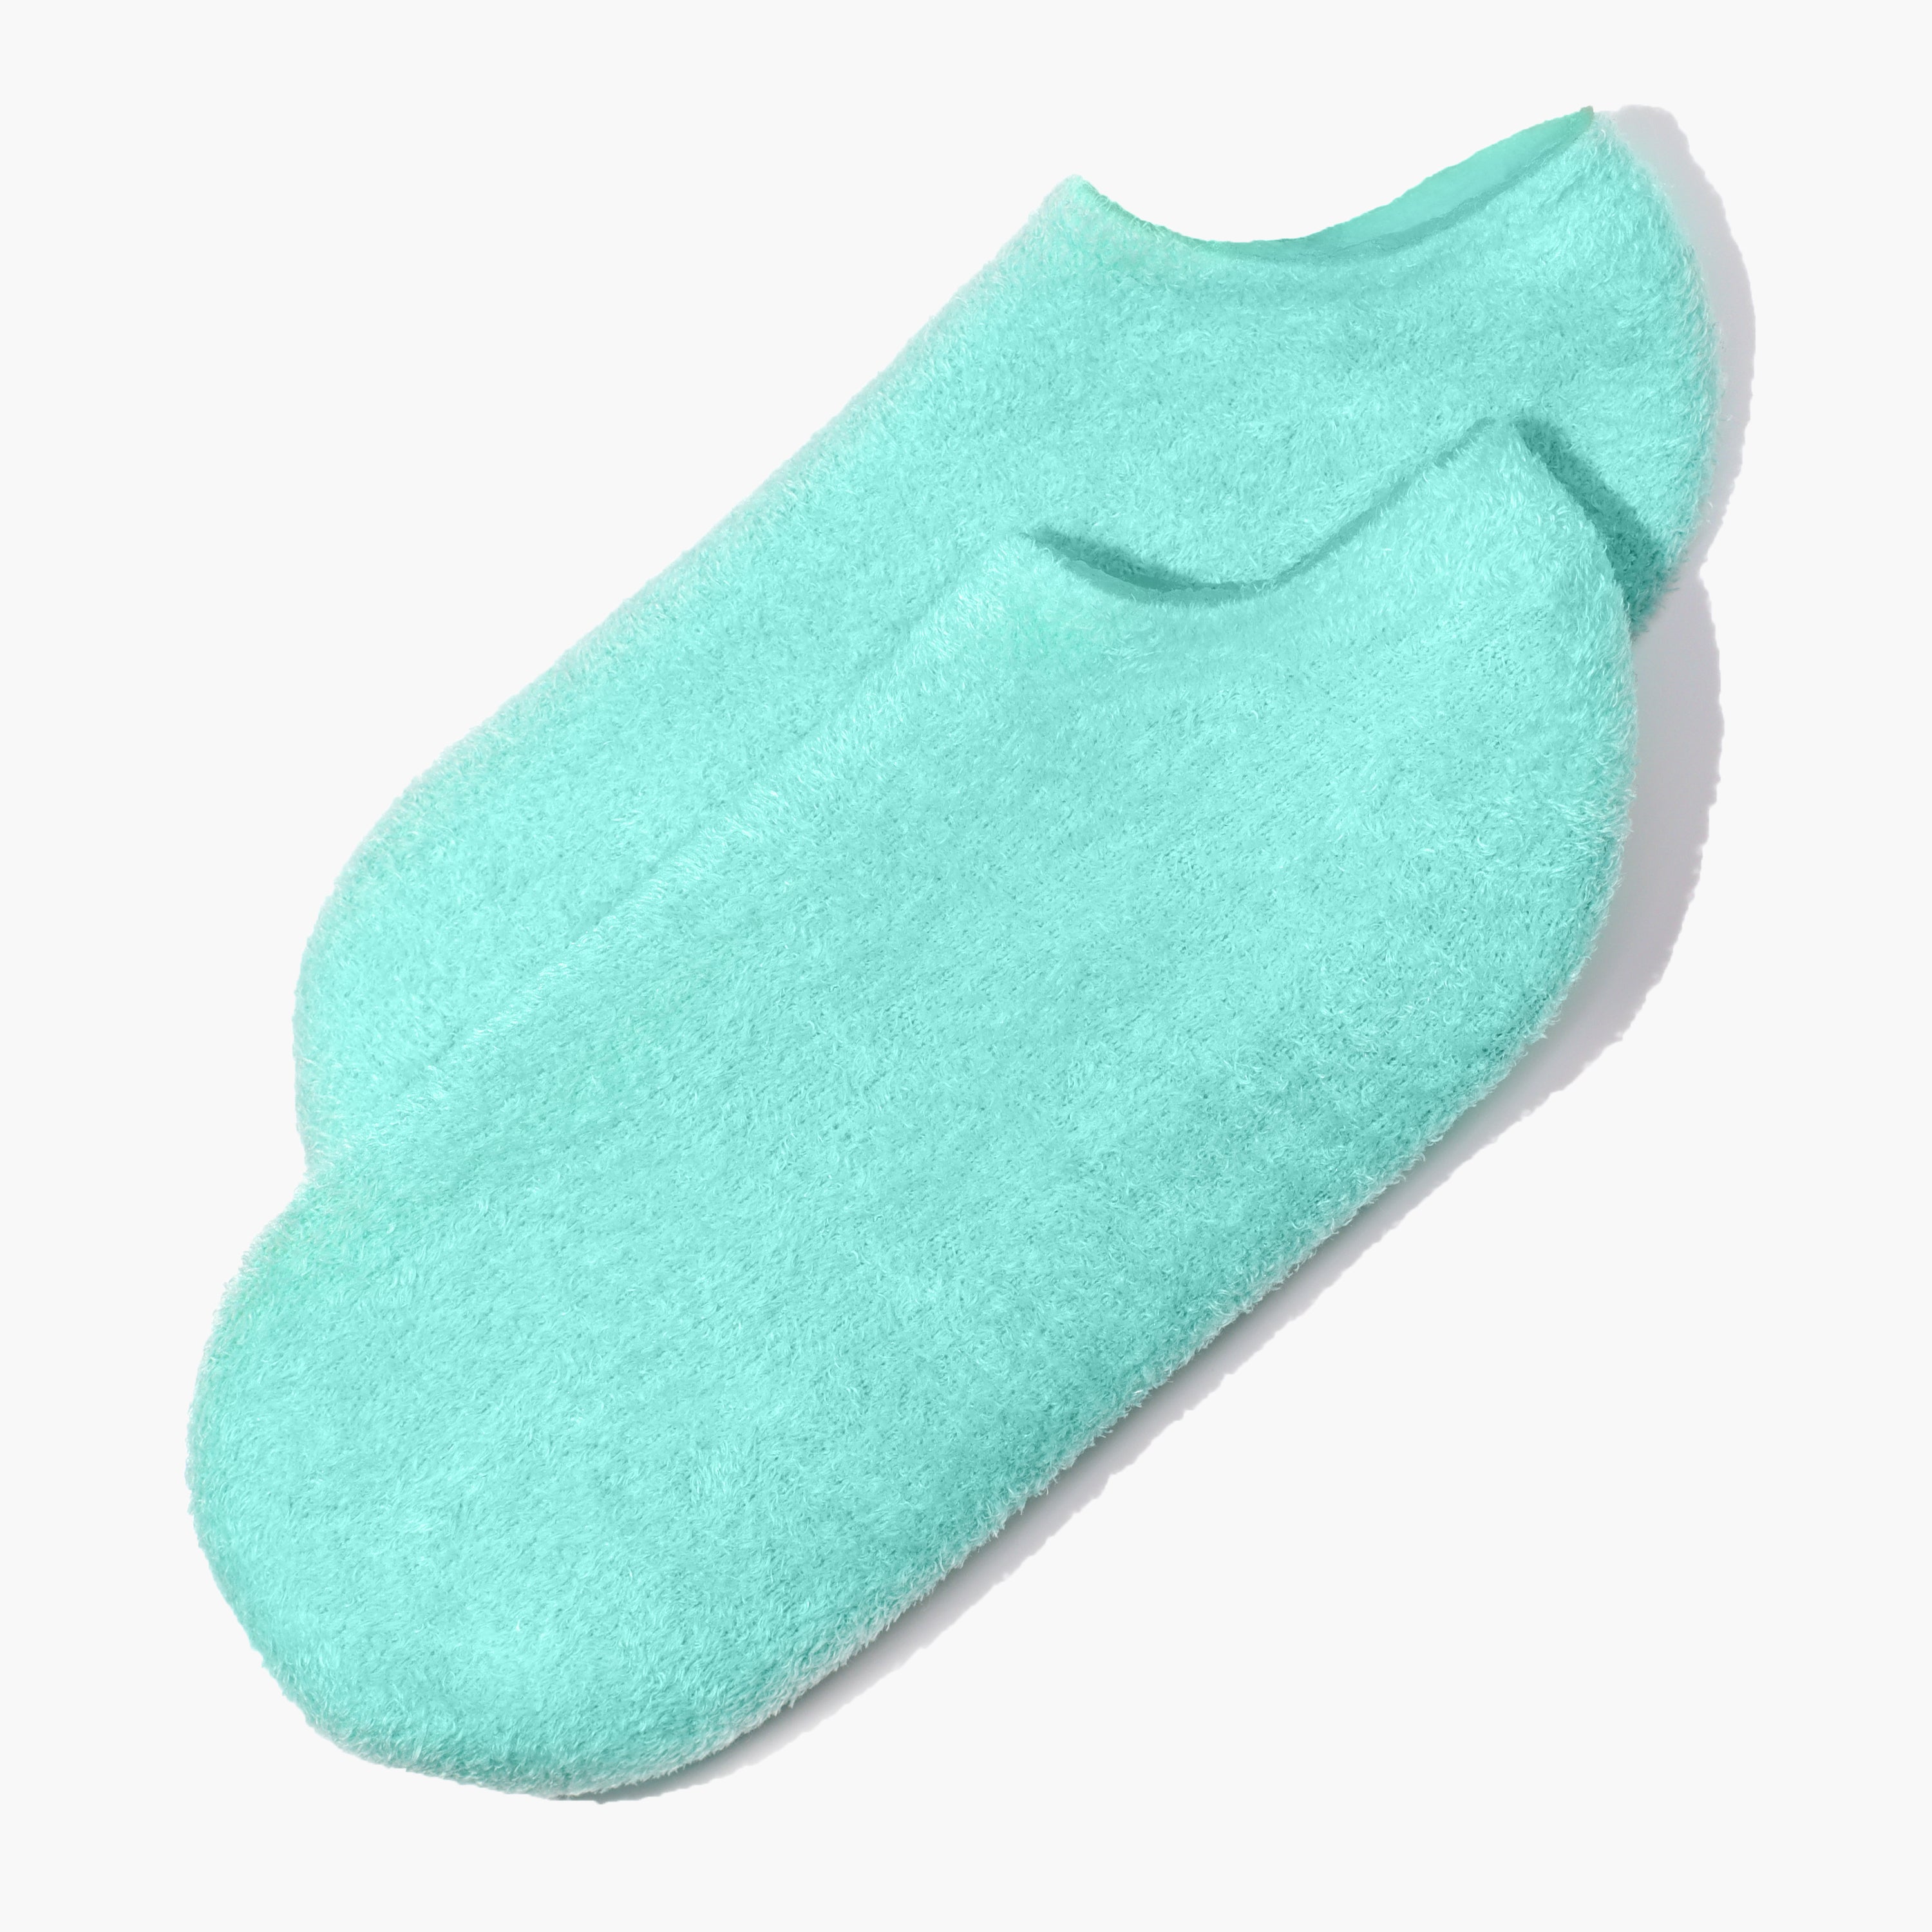 Pedi Perfect Moisturizing Spa Socks, Foot Care